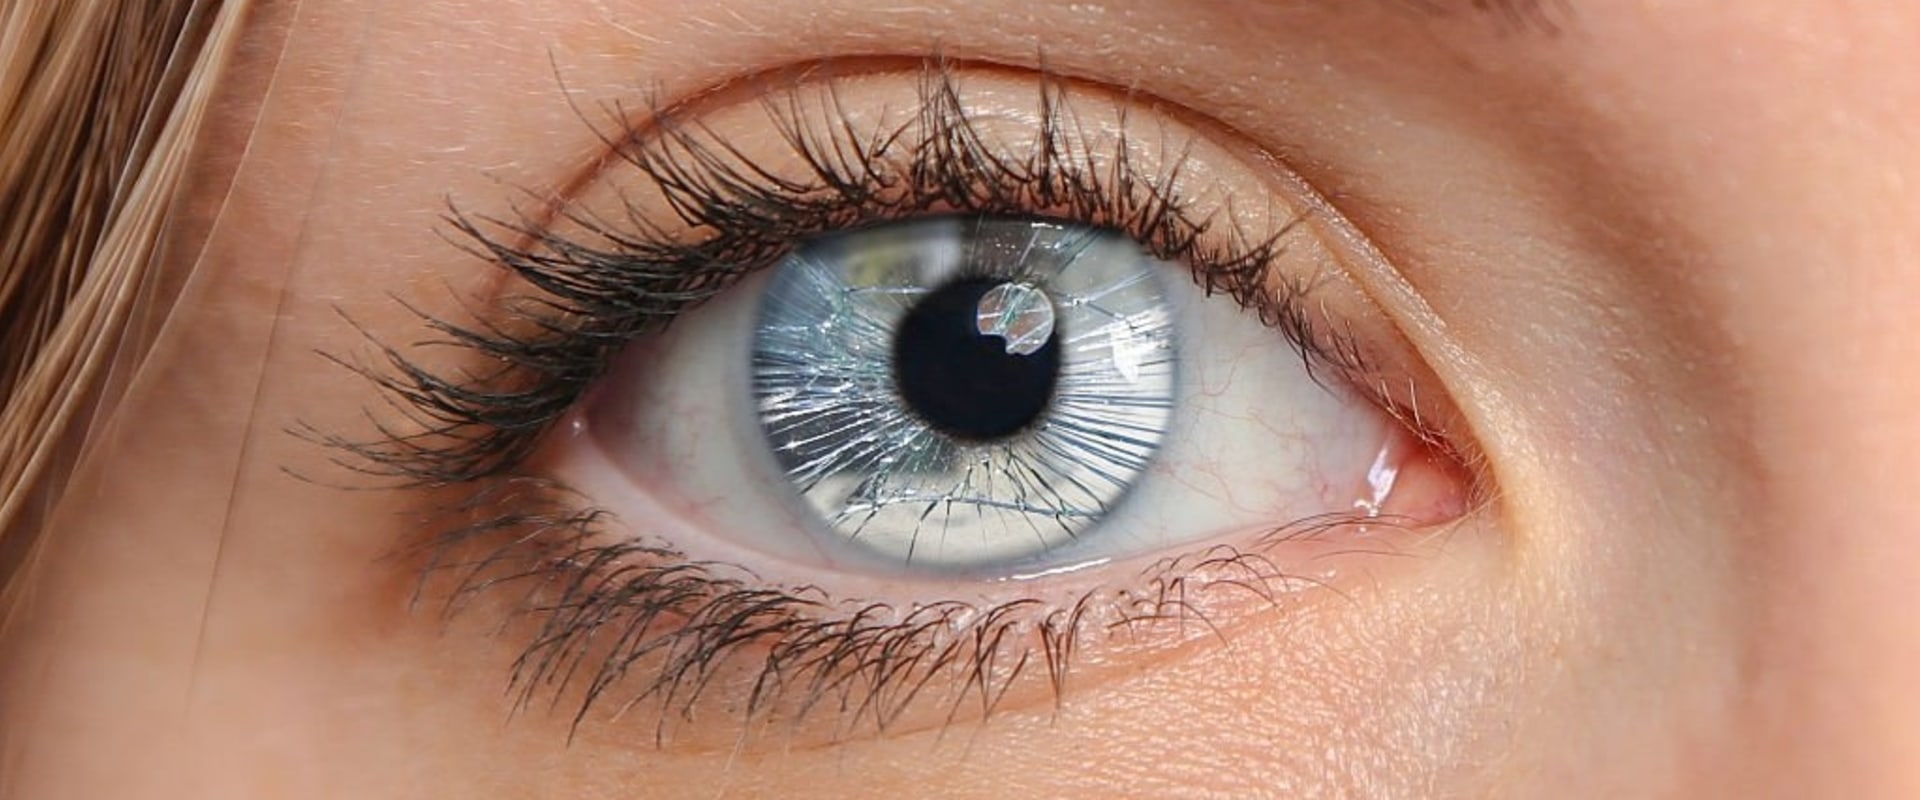 How Long Does it Take for Damaged Eyelashes to Grow Back?